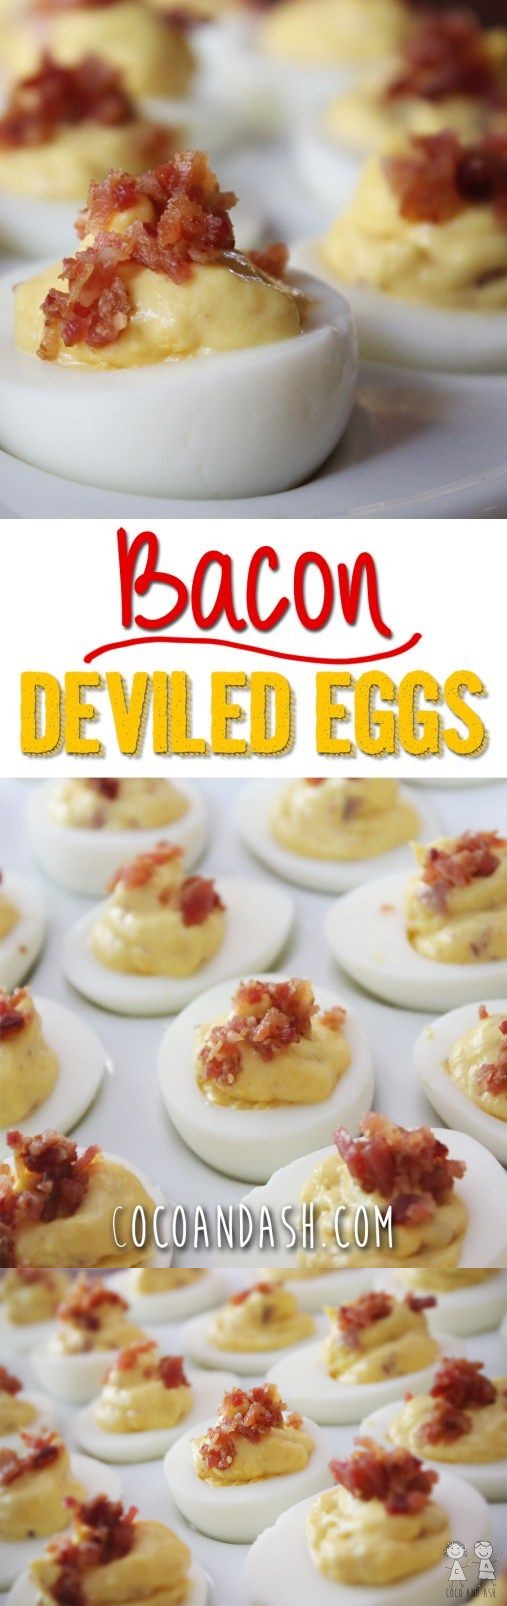 BACON Deviled Eggs